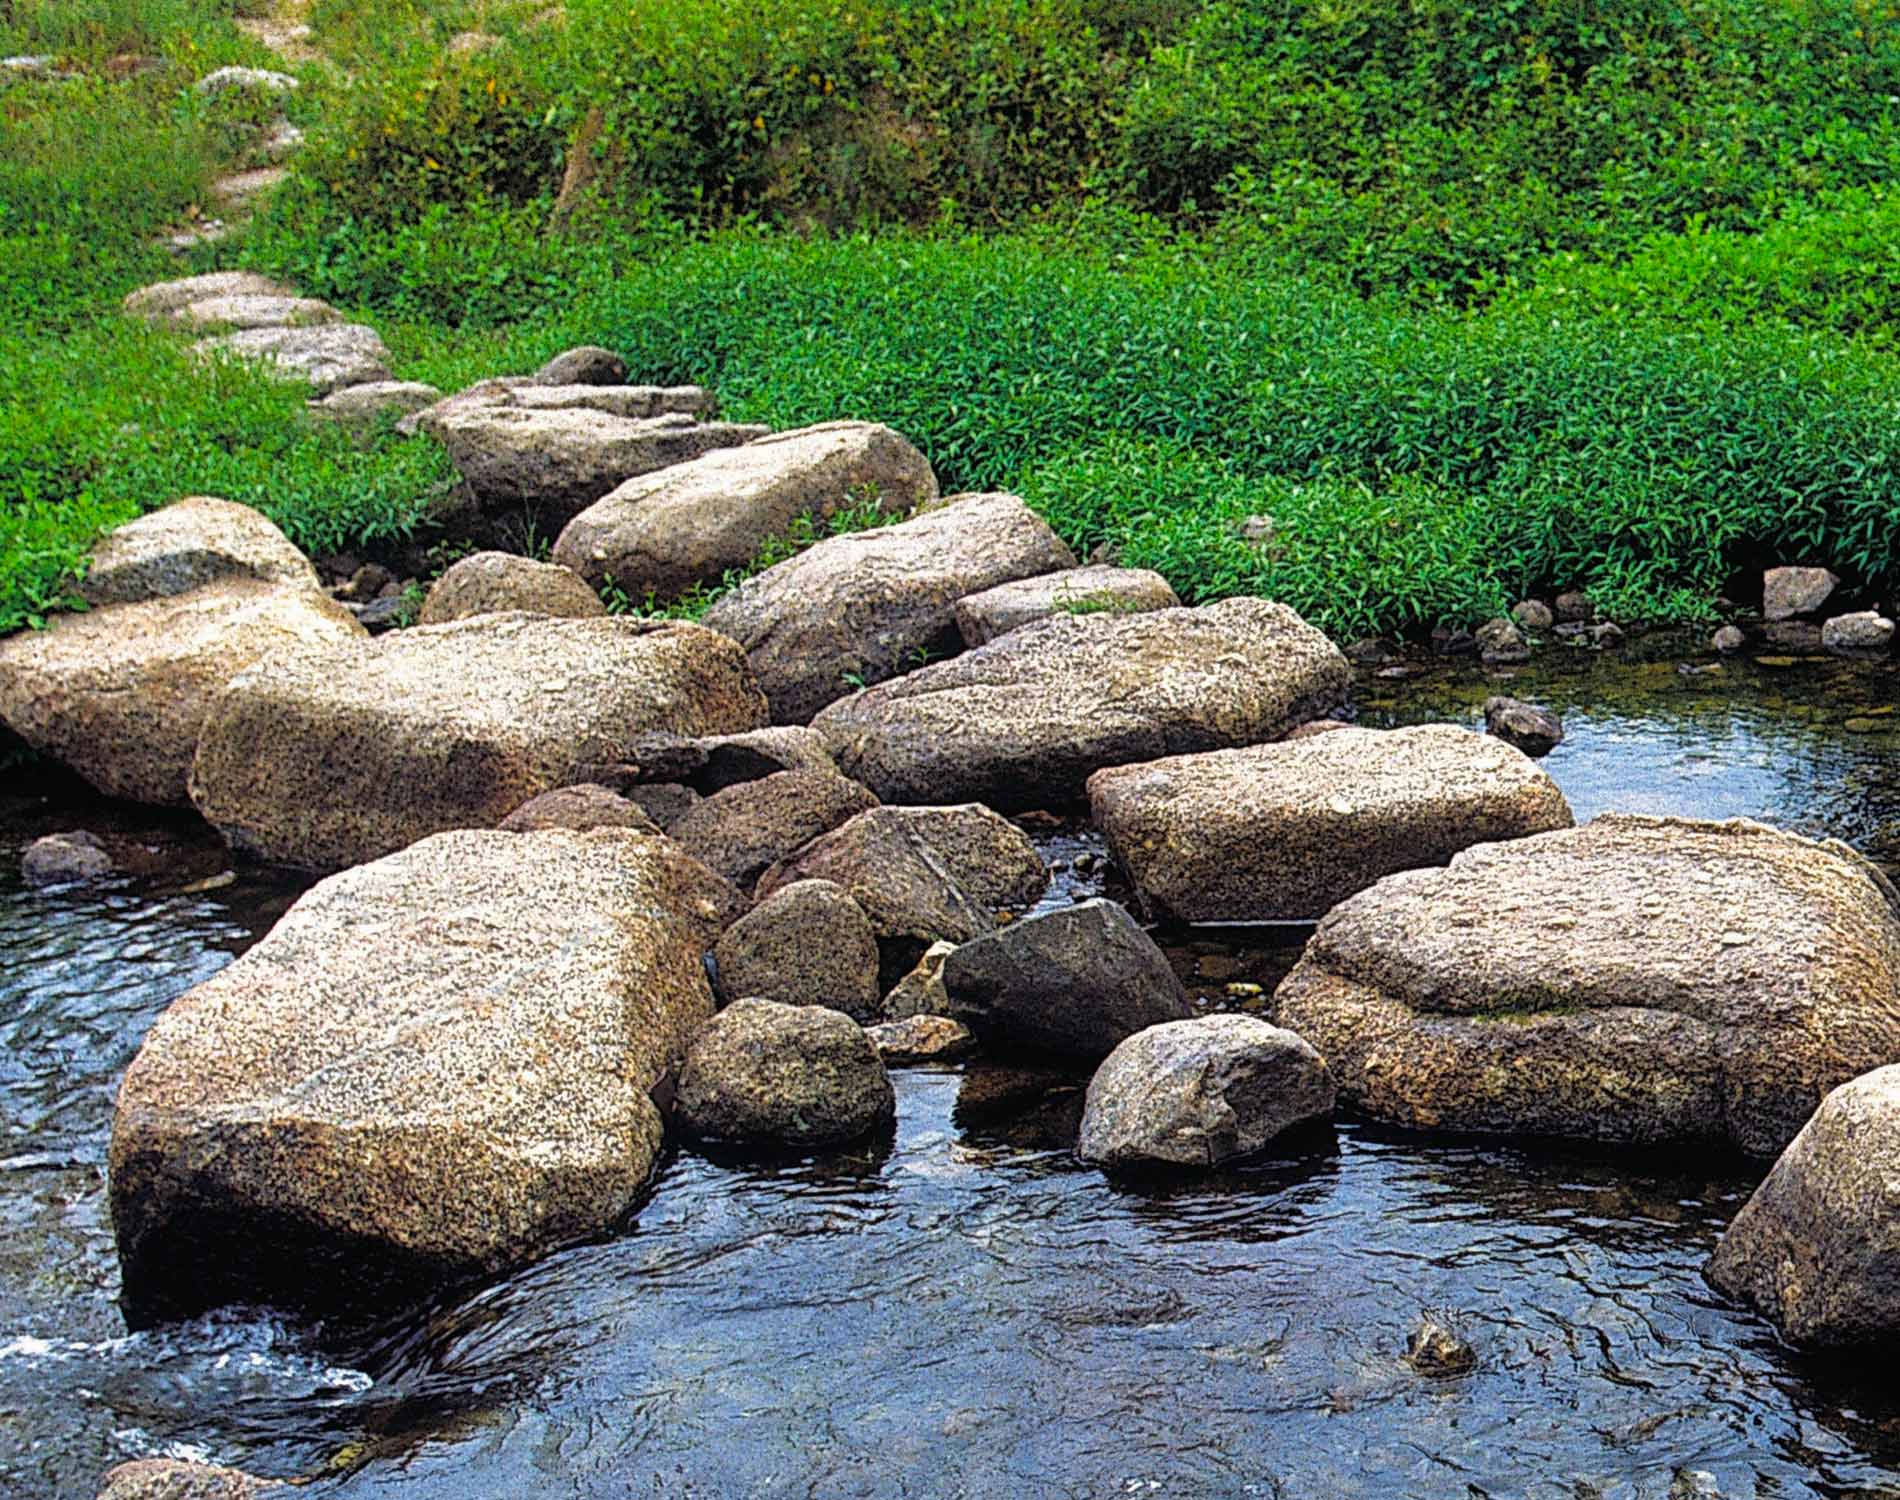 Creek with rocks